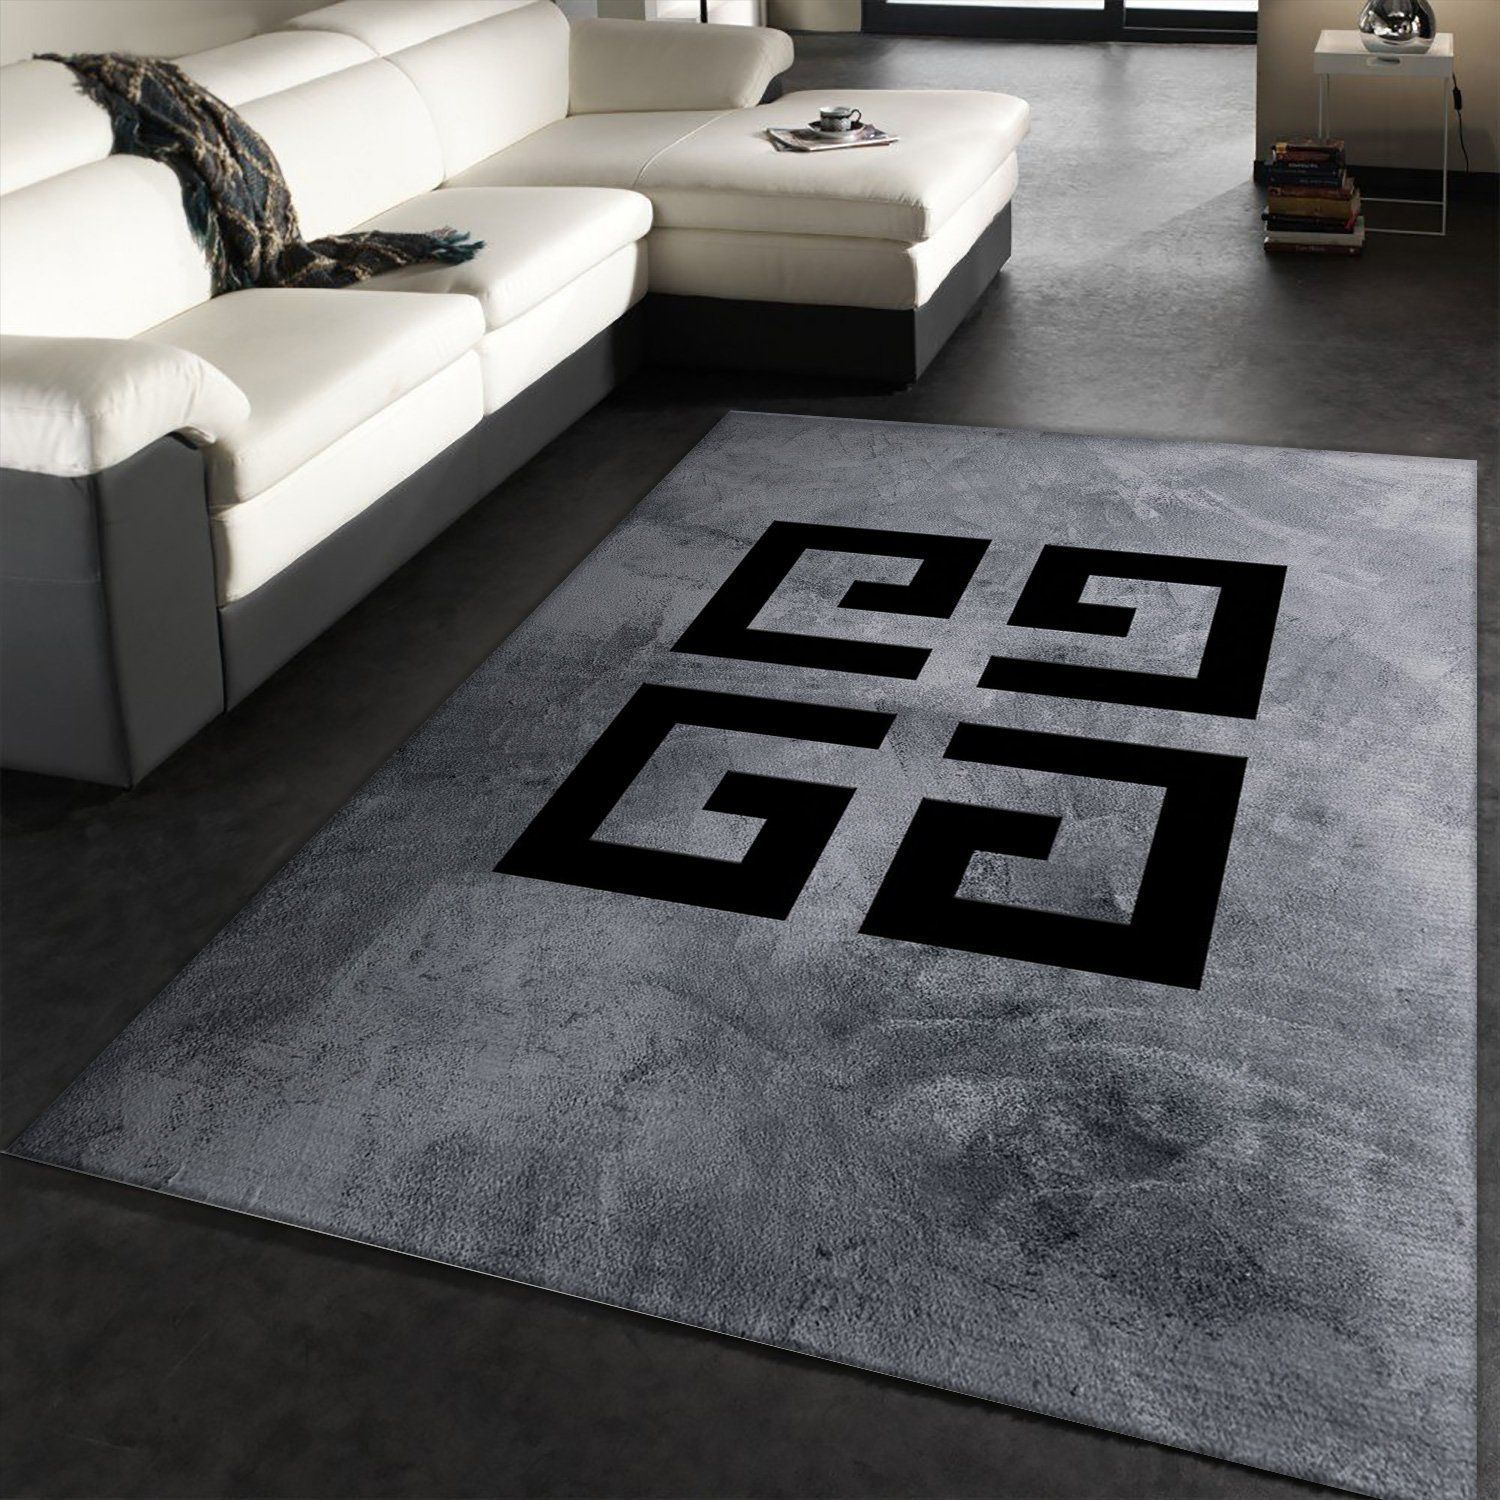 Givenchy Rug Fashion Brand Rug Home Decor Floor Decor - Indoor Outdoor Rugs